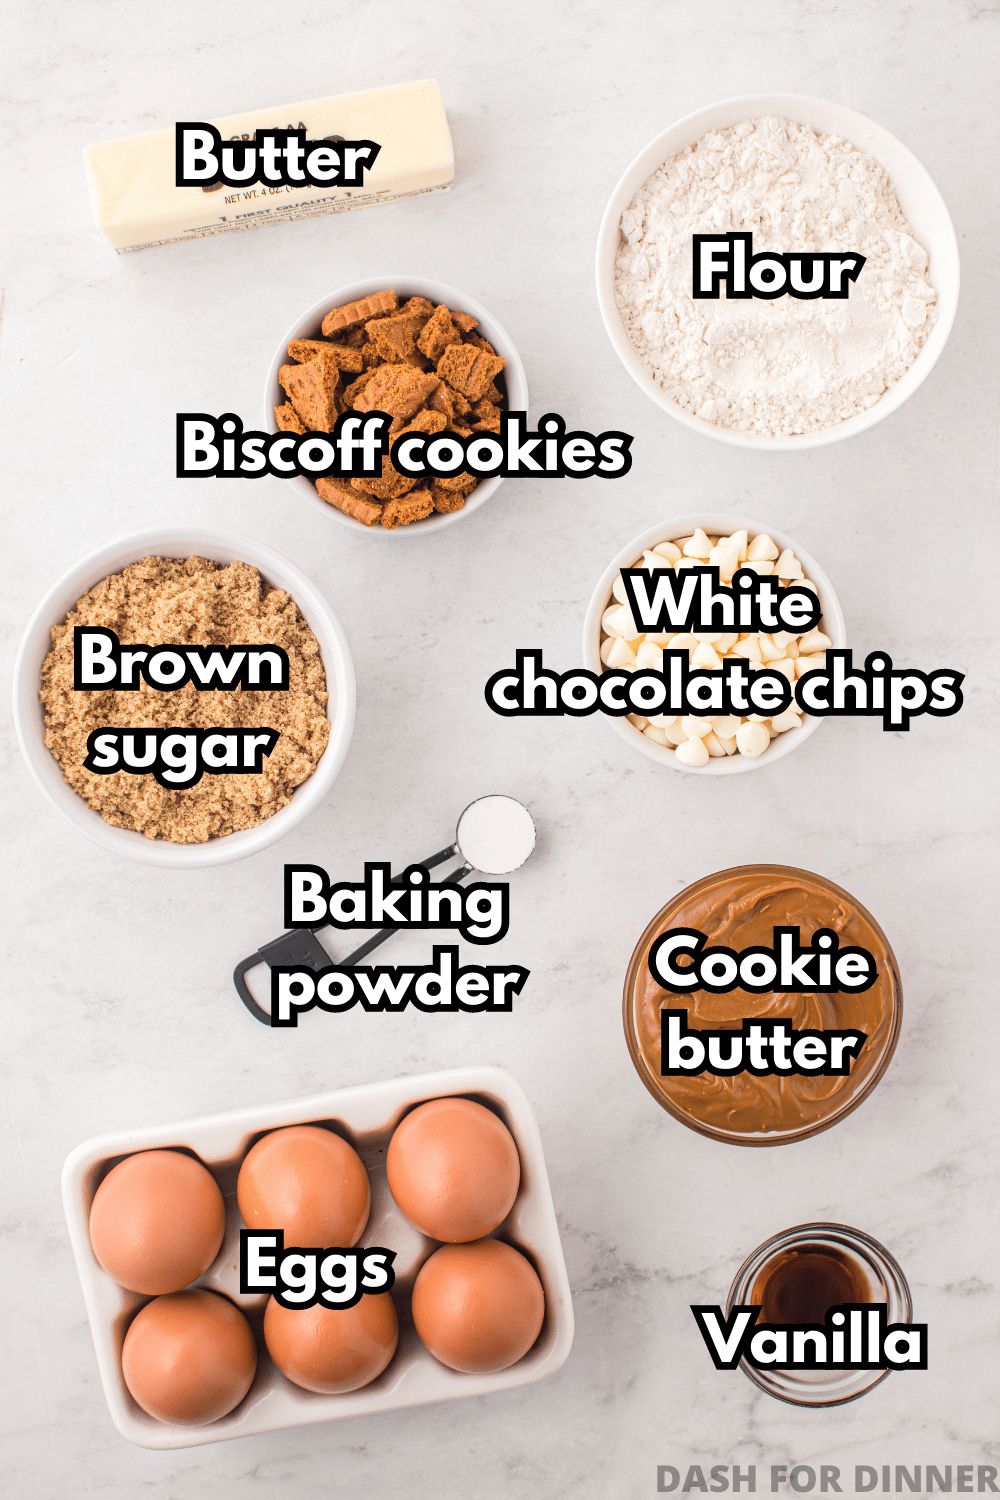 The ingredients needed to make cookie butter blondies: biscoff cookies, eggs, flour, brown sugar, cookie butter, etc.